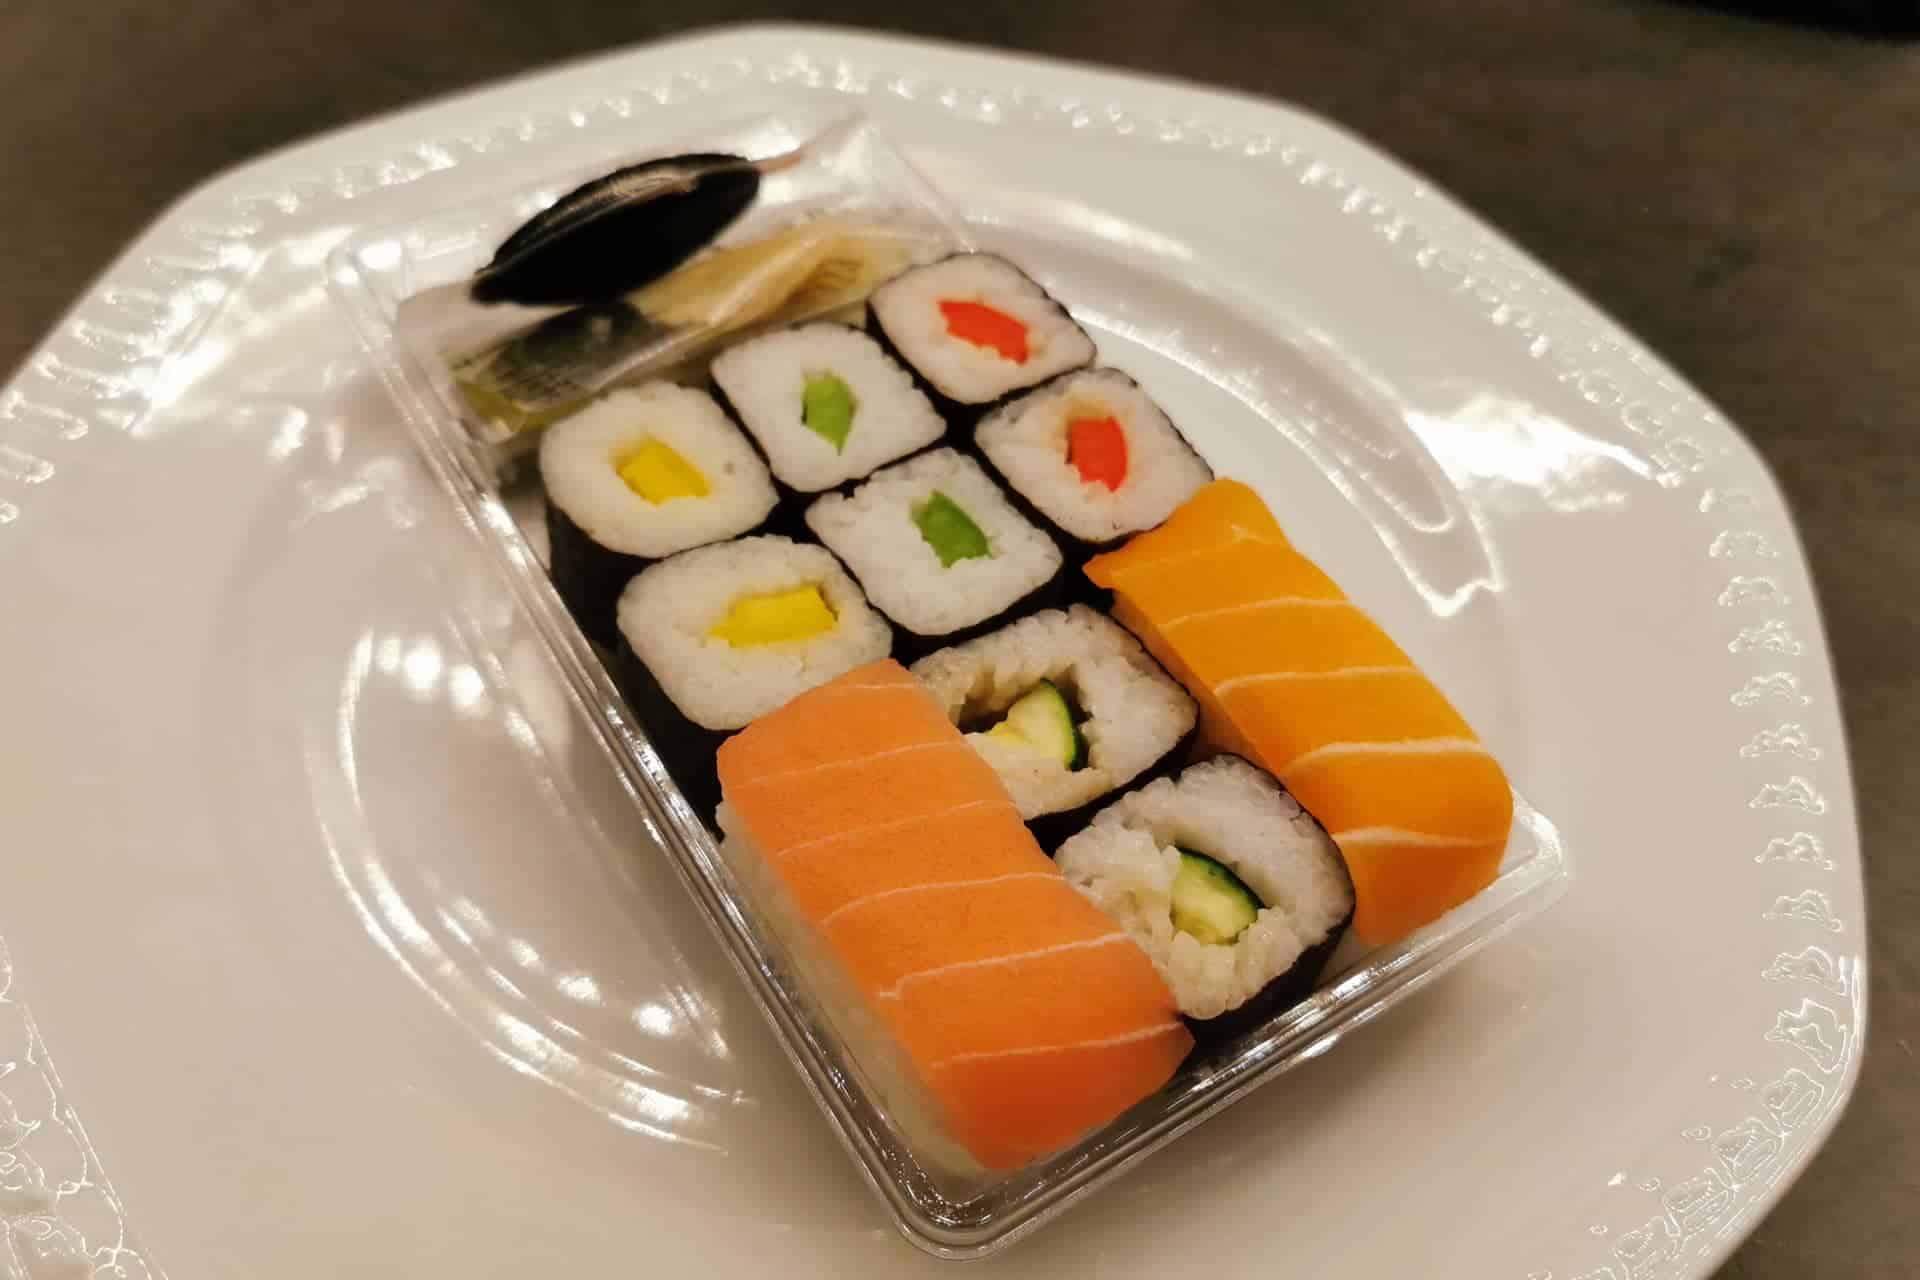 Food for Future - Kojo Sushi